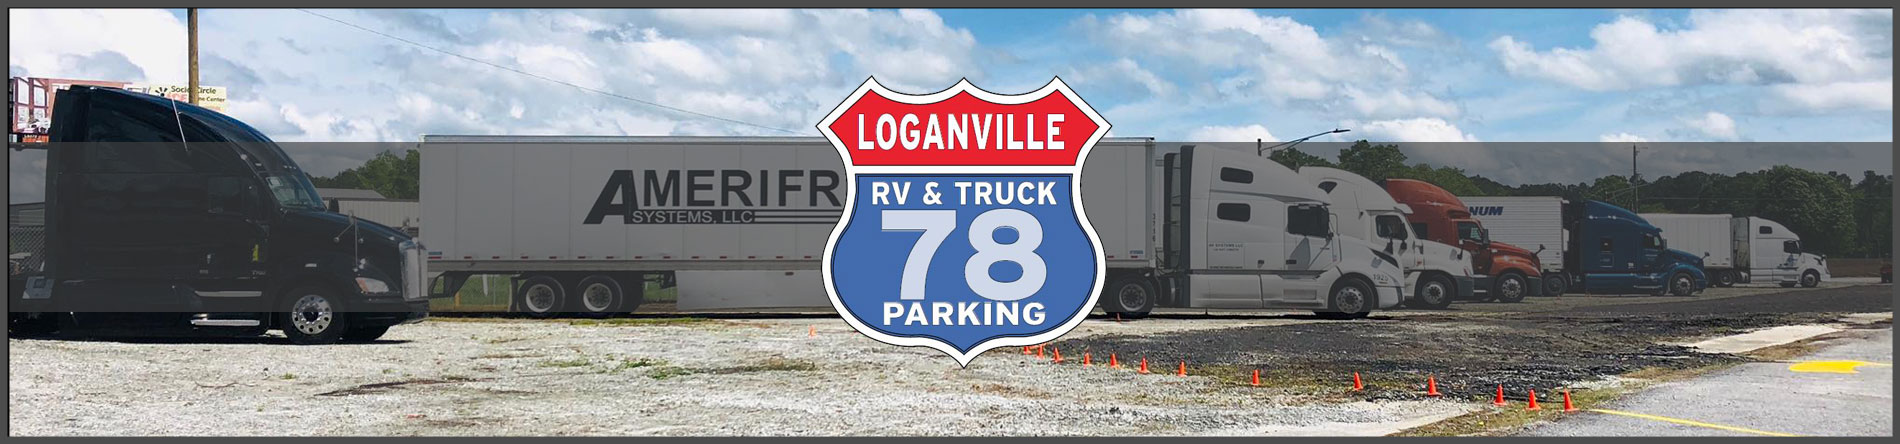 Loganville RV & Truck Parking